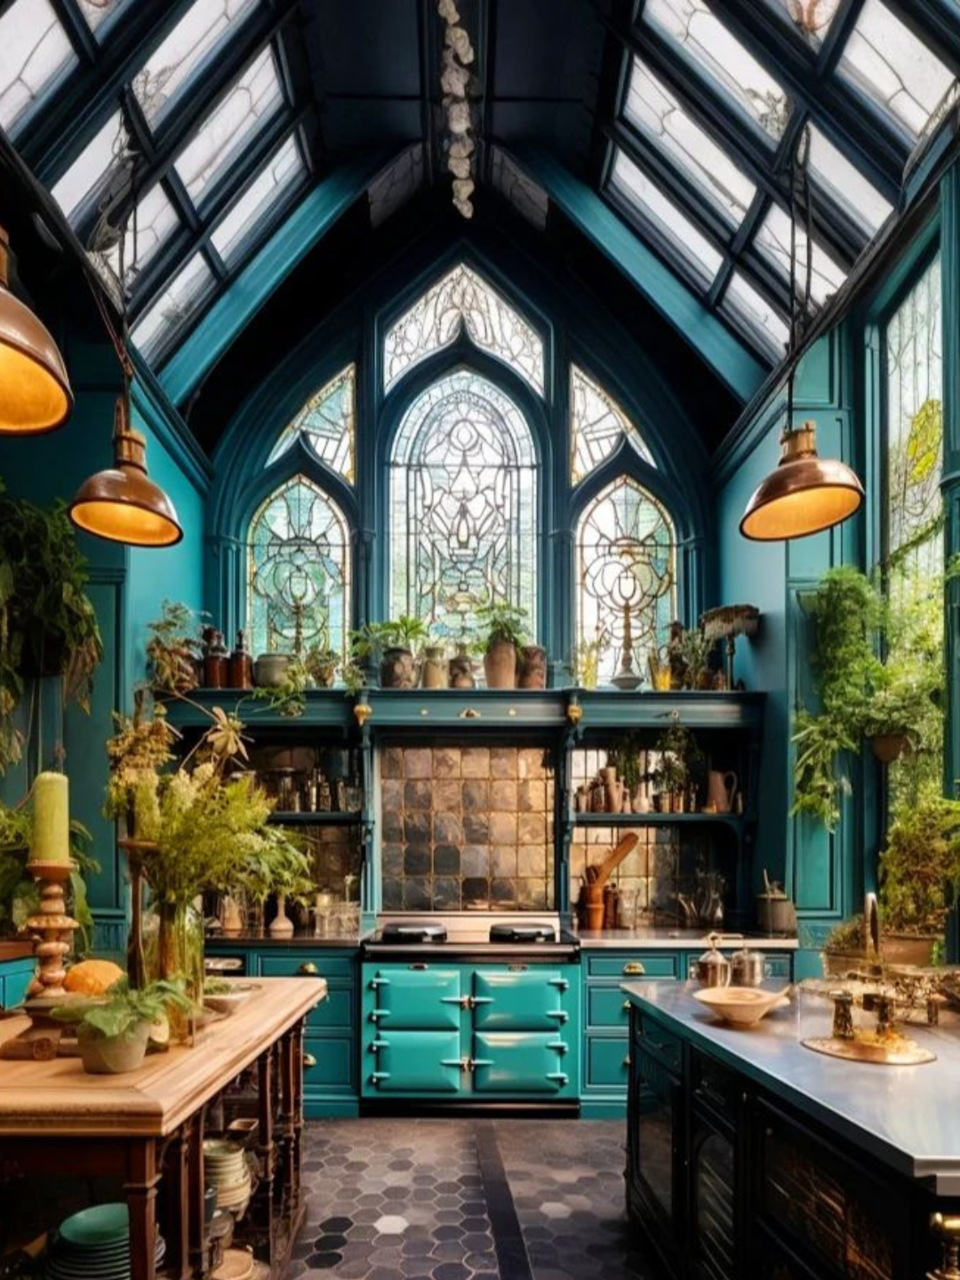 AI generates Hogwarts-like Teal-blue kitchen